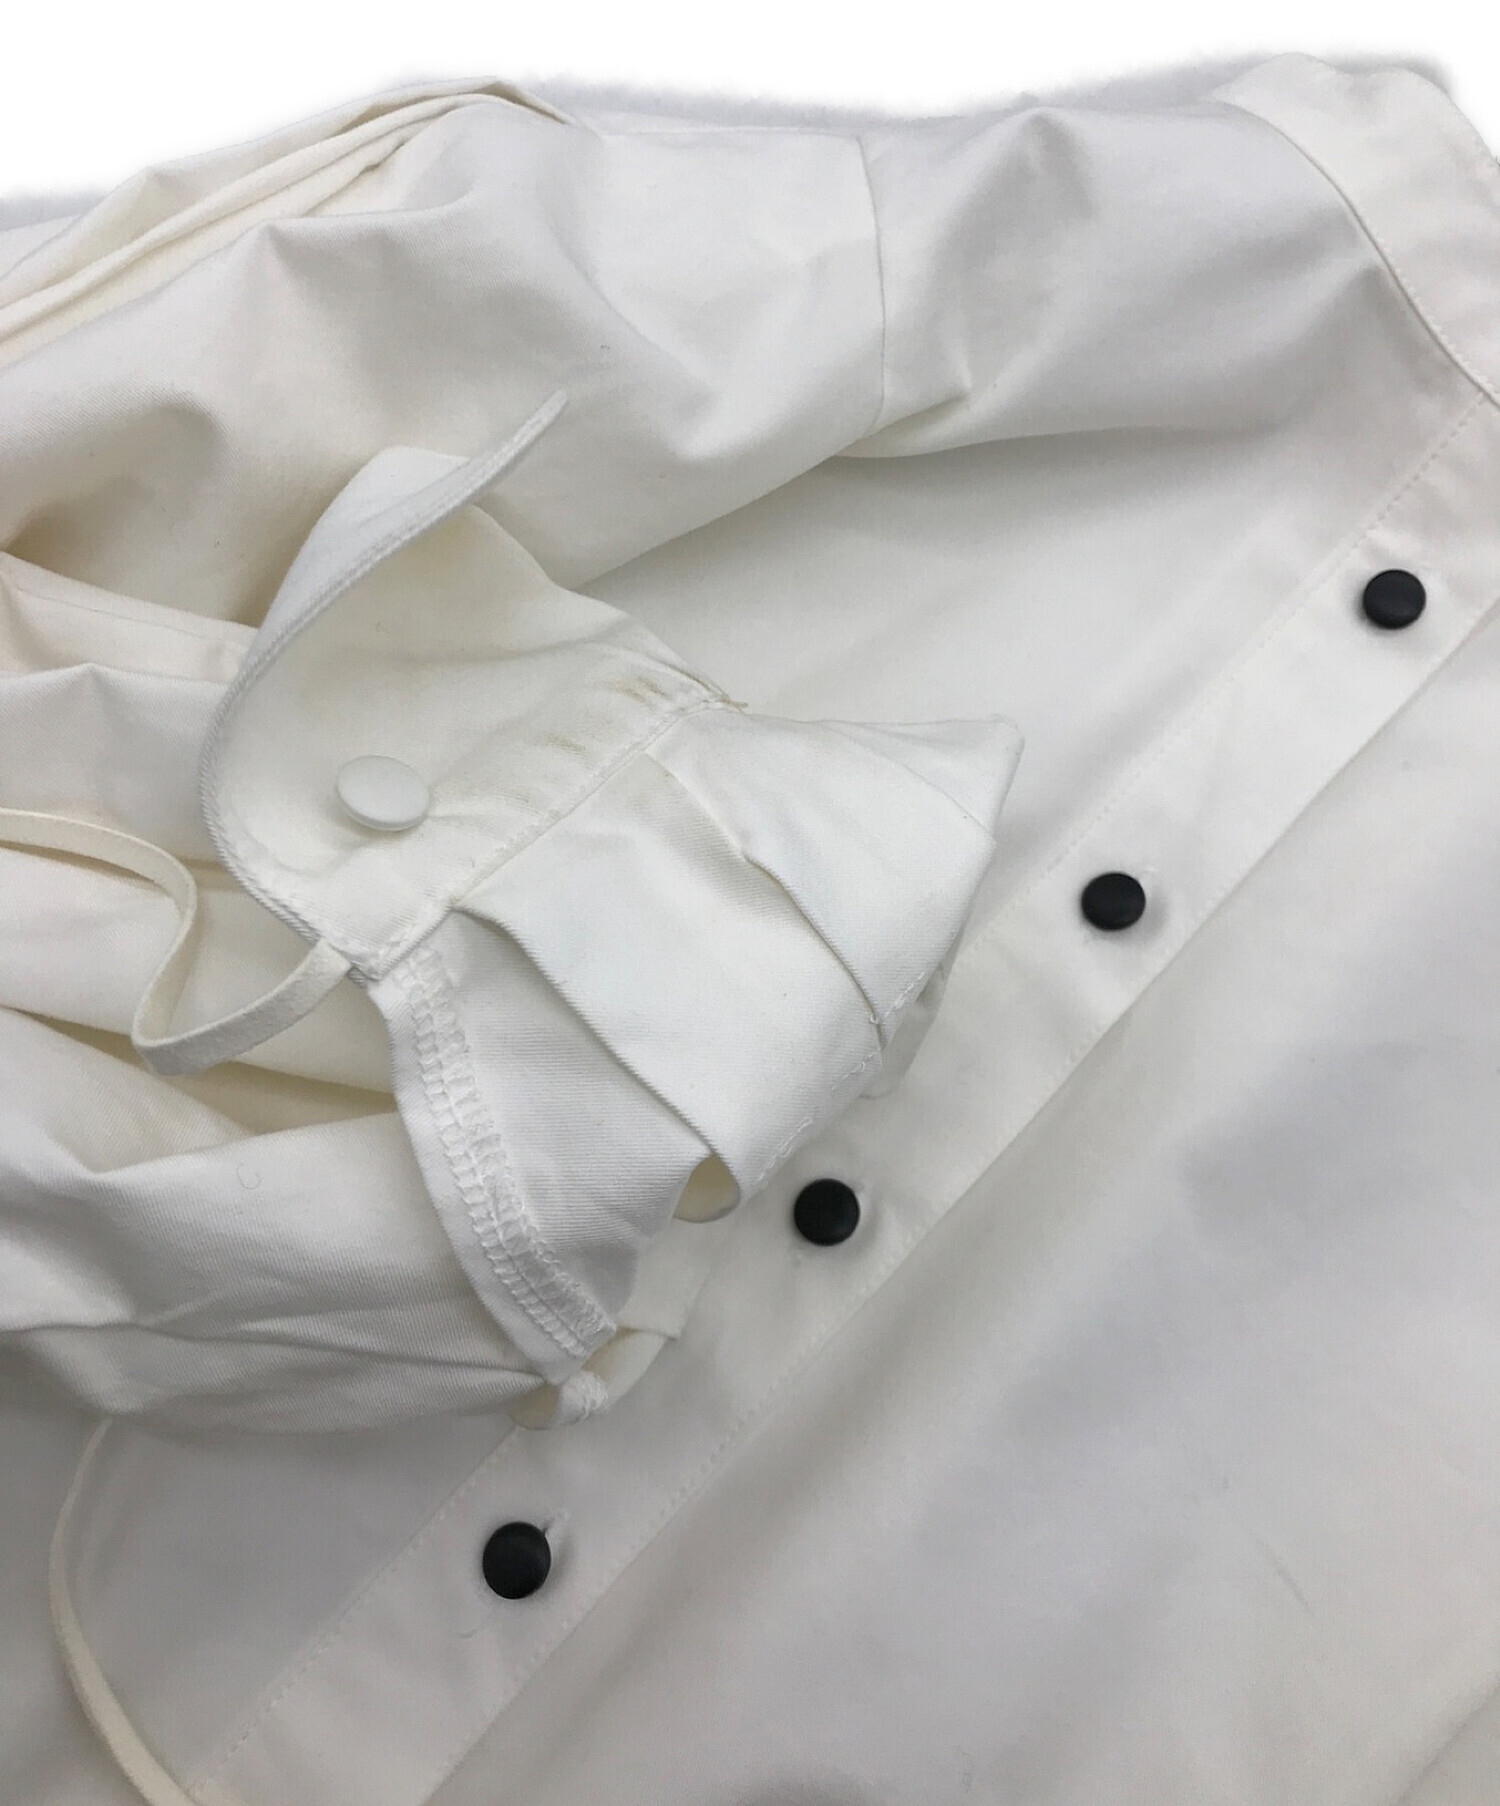 RIKO (リコ) Lantern sleeve jacket shirt/ランタンスリーブジャケットシャツ ホワイト サイズ:FREE